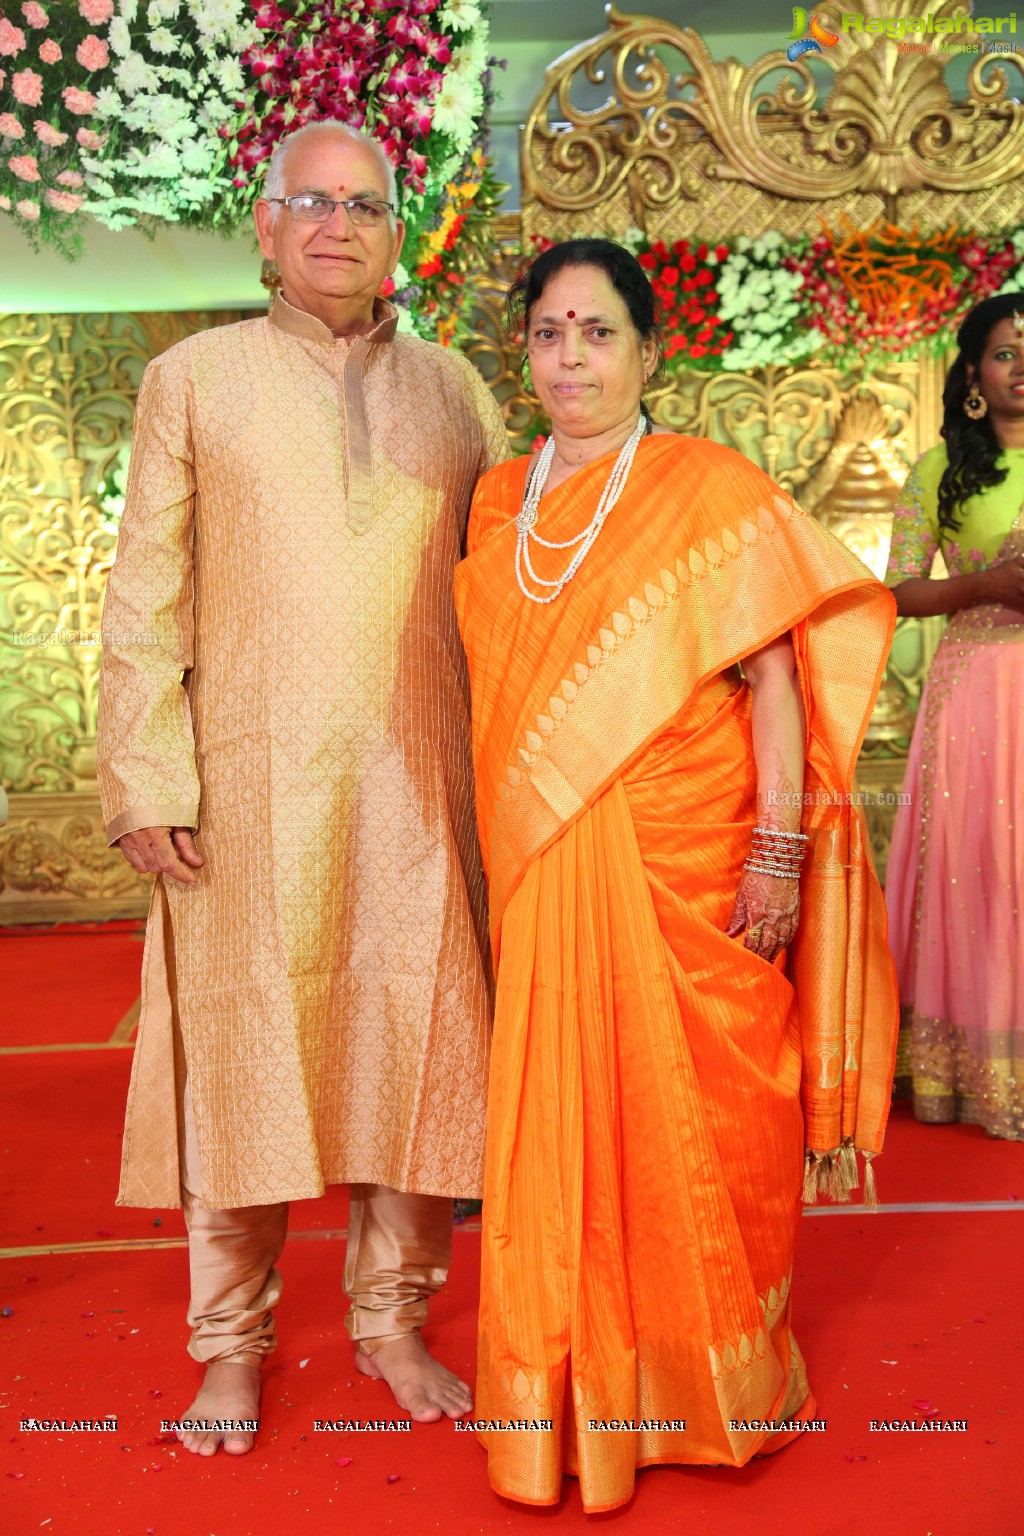 Grand Wedding Reception of Bhupal Raju with Manogna at Butta Convention, Hyderabad